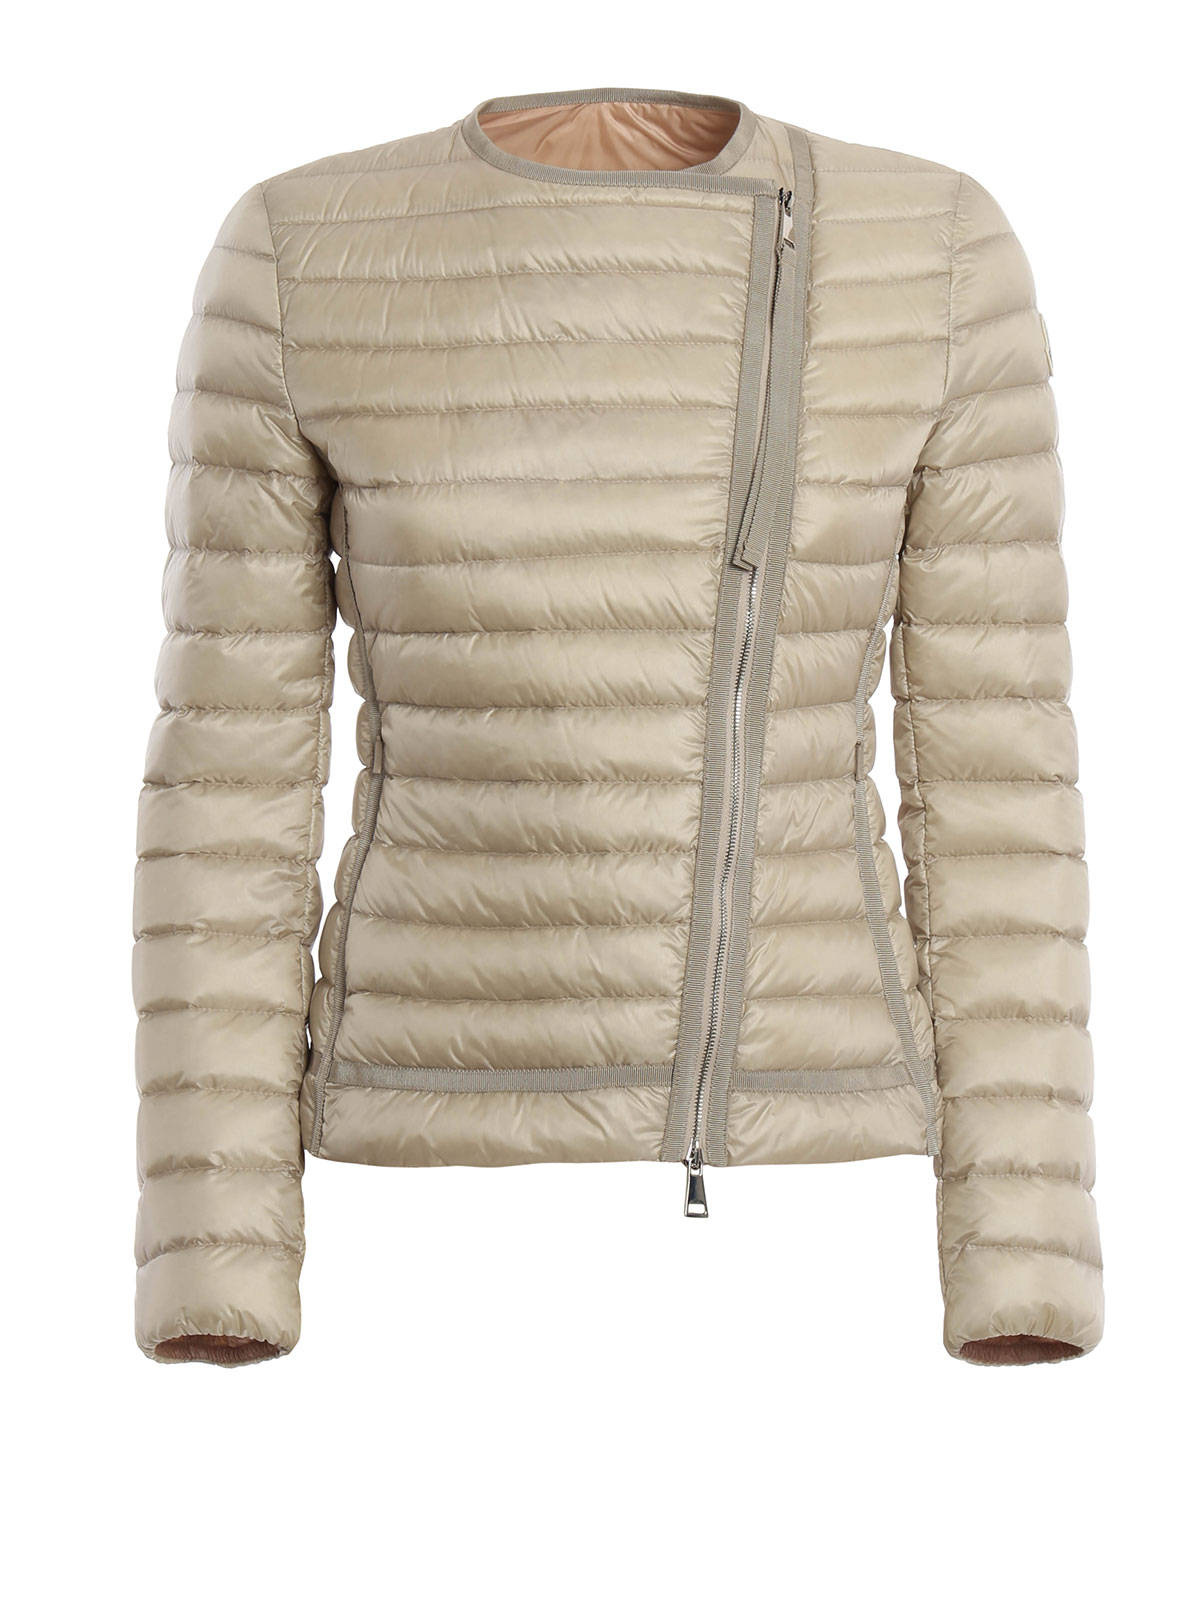 moncler jacket ebay